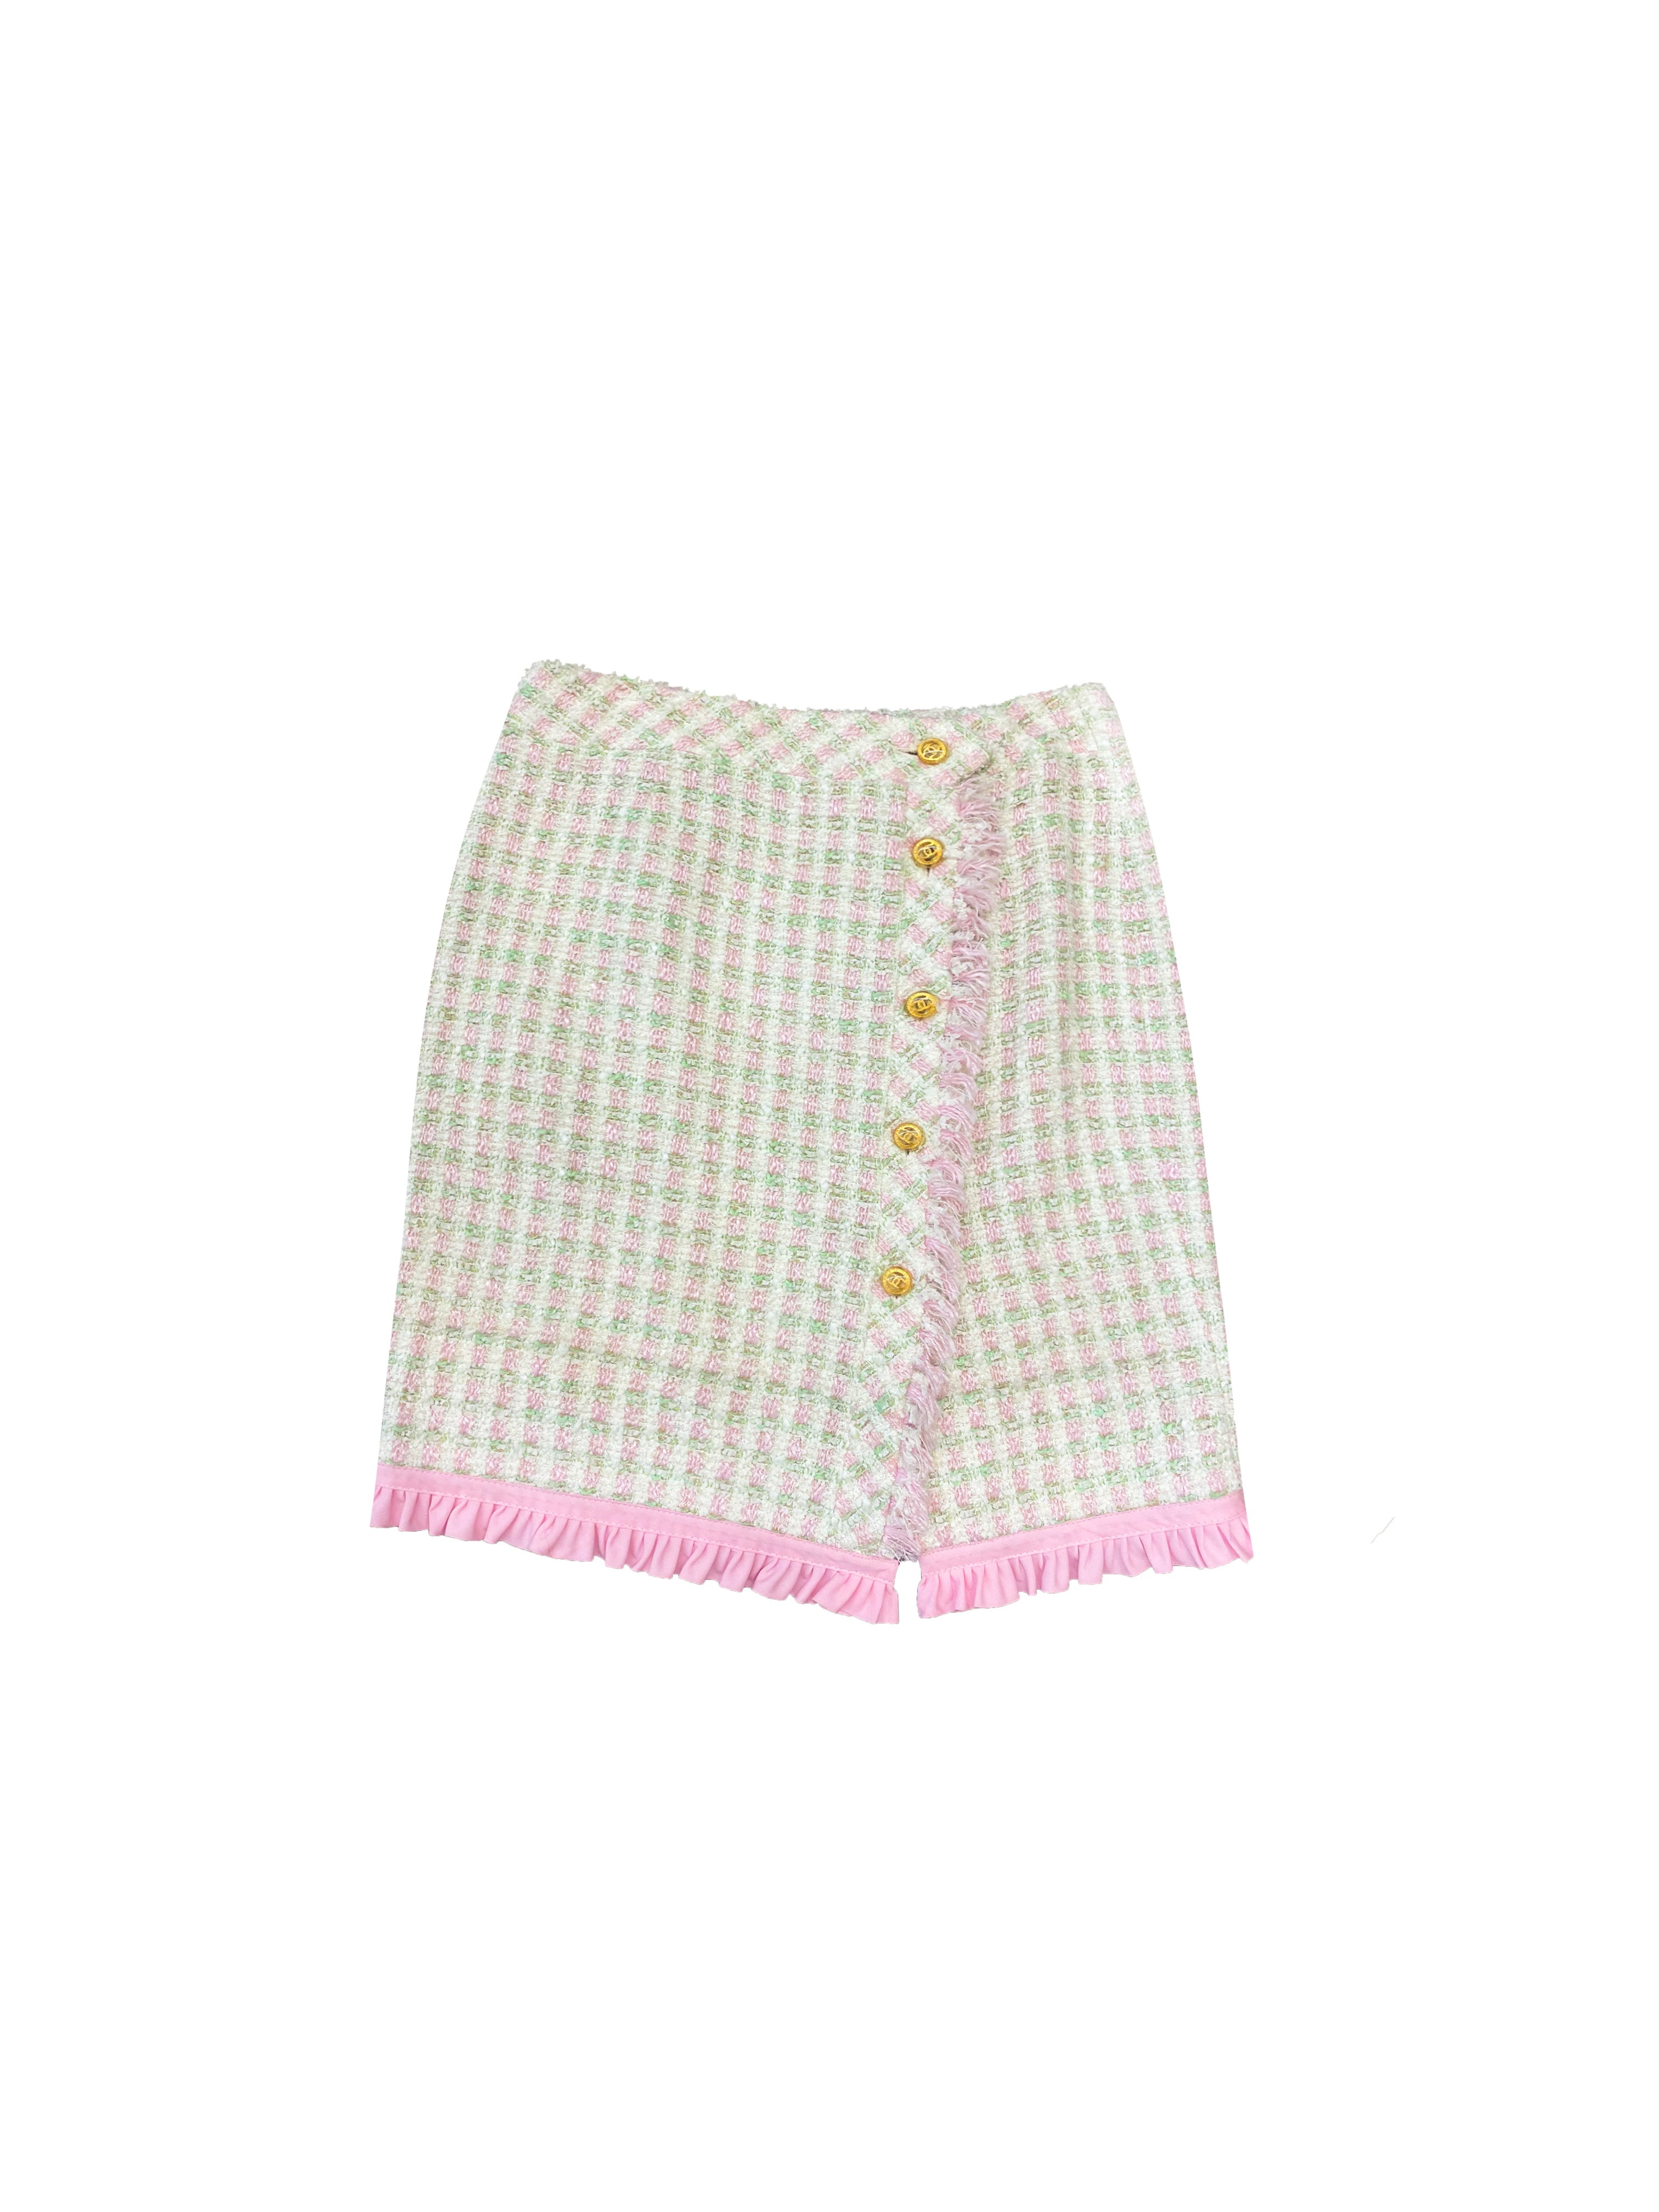 Chanel 1980s Pastel Tweed Mini Skirt